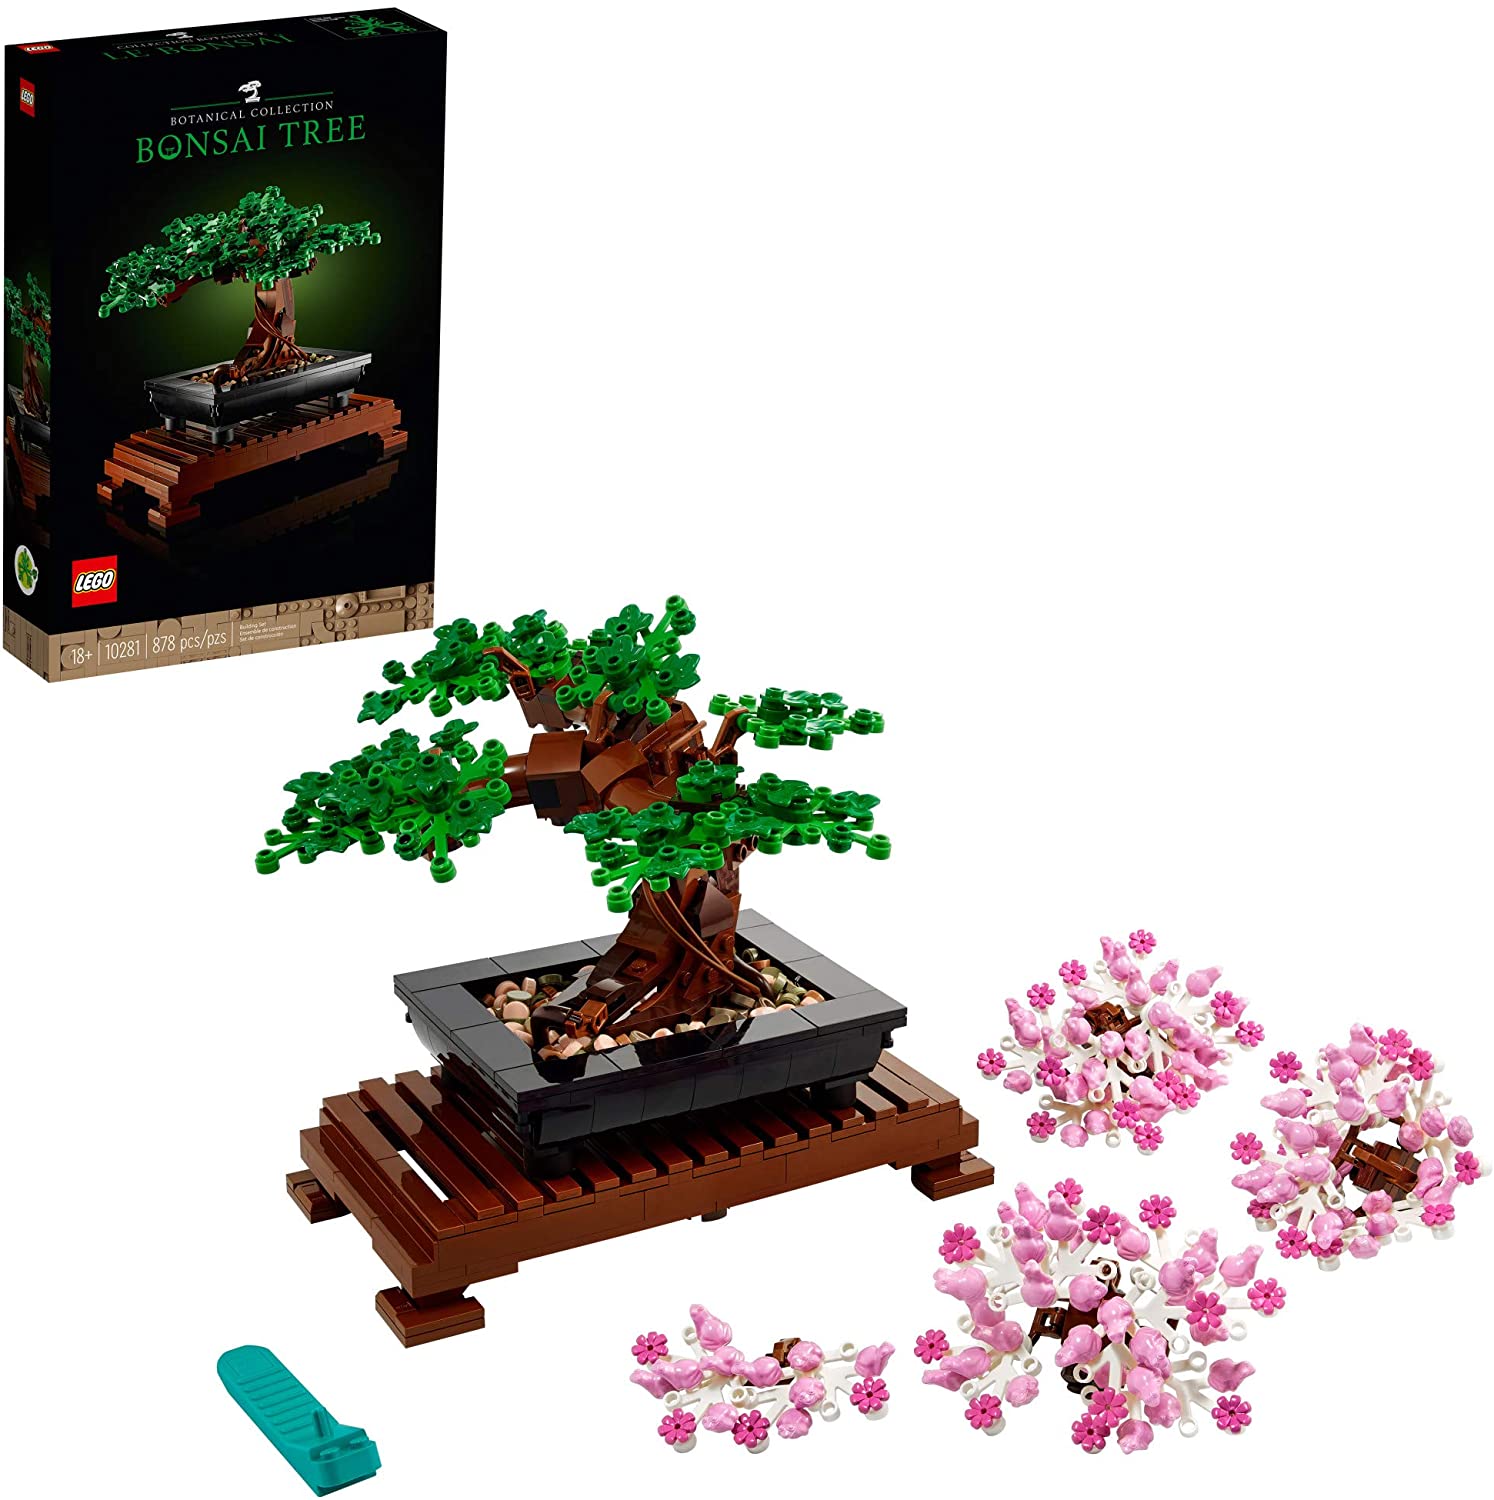 878-Piece LEGO Botanical Collection Bonsai Tree Building Set $39.99 + Free Shipping